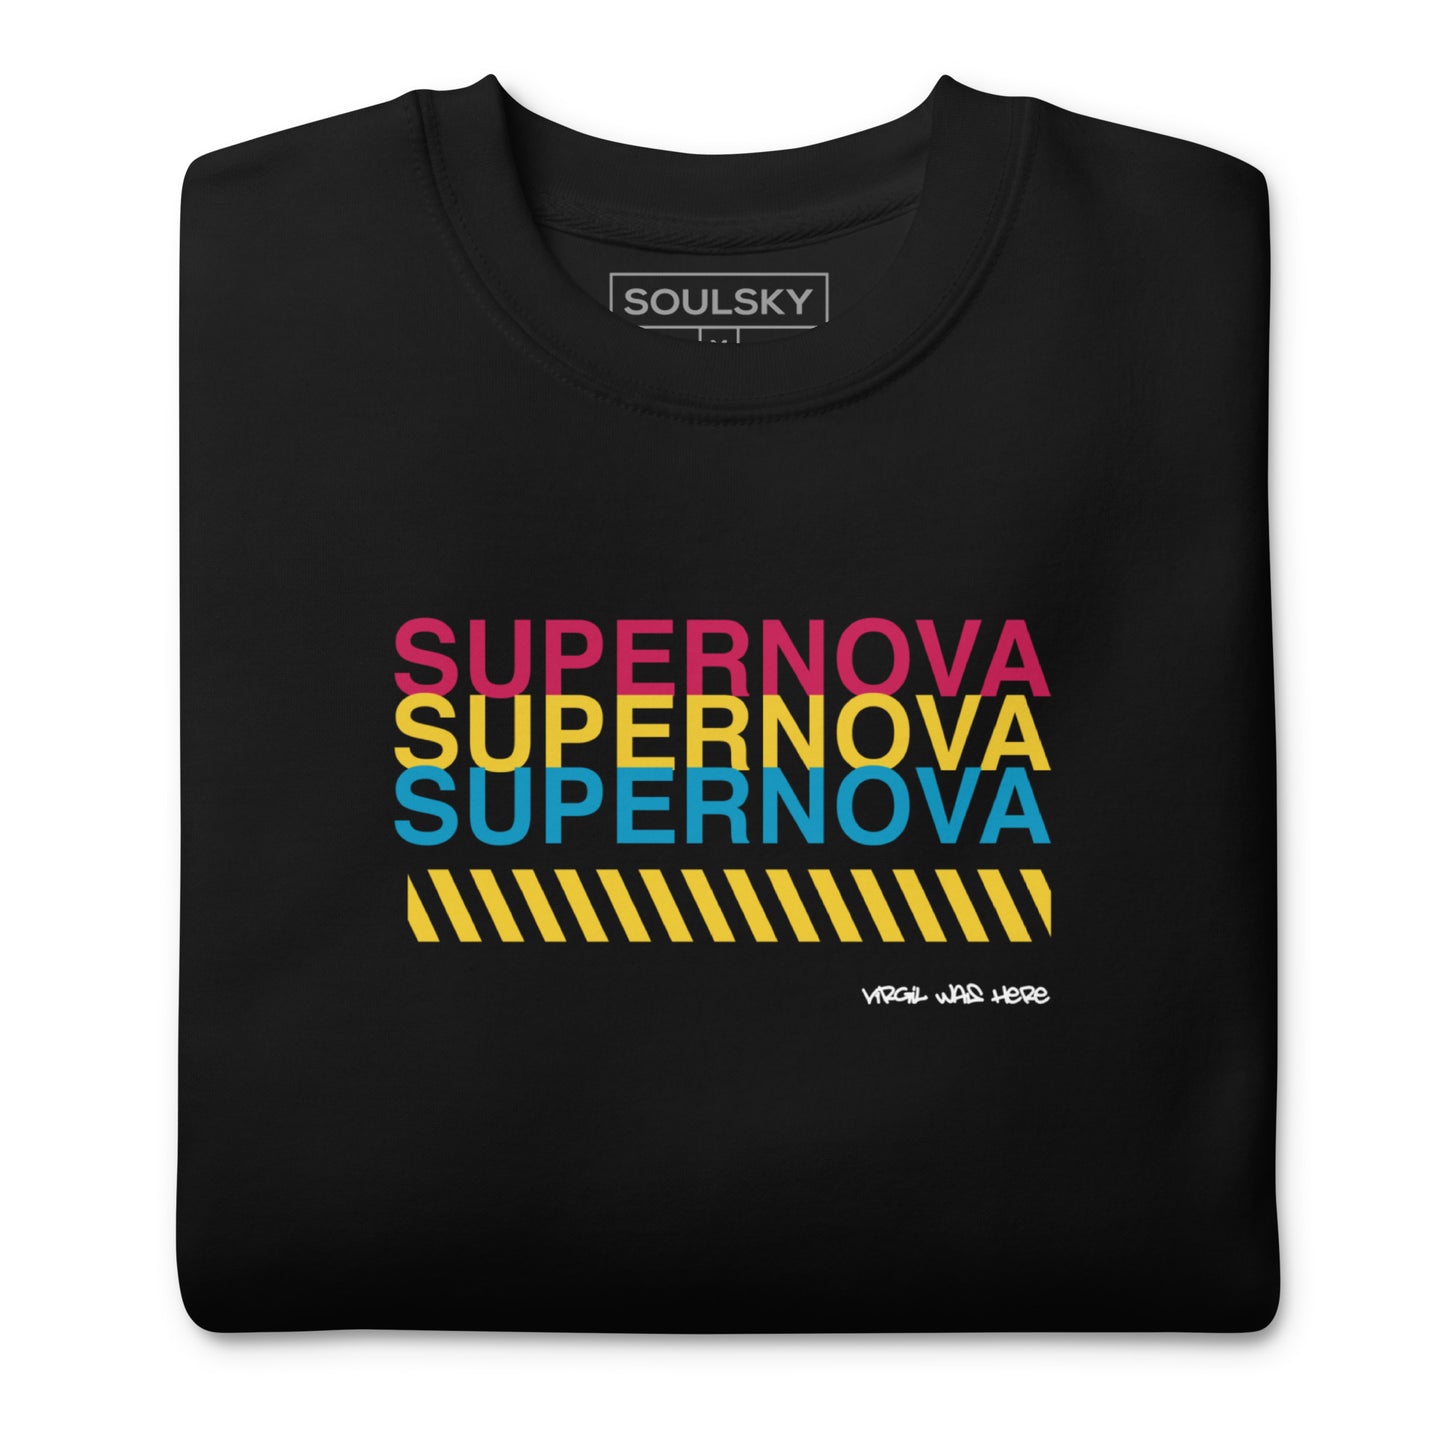 SUPERNOVA Sweatshirt